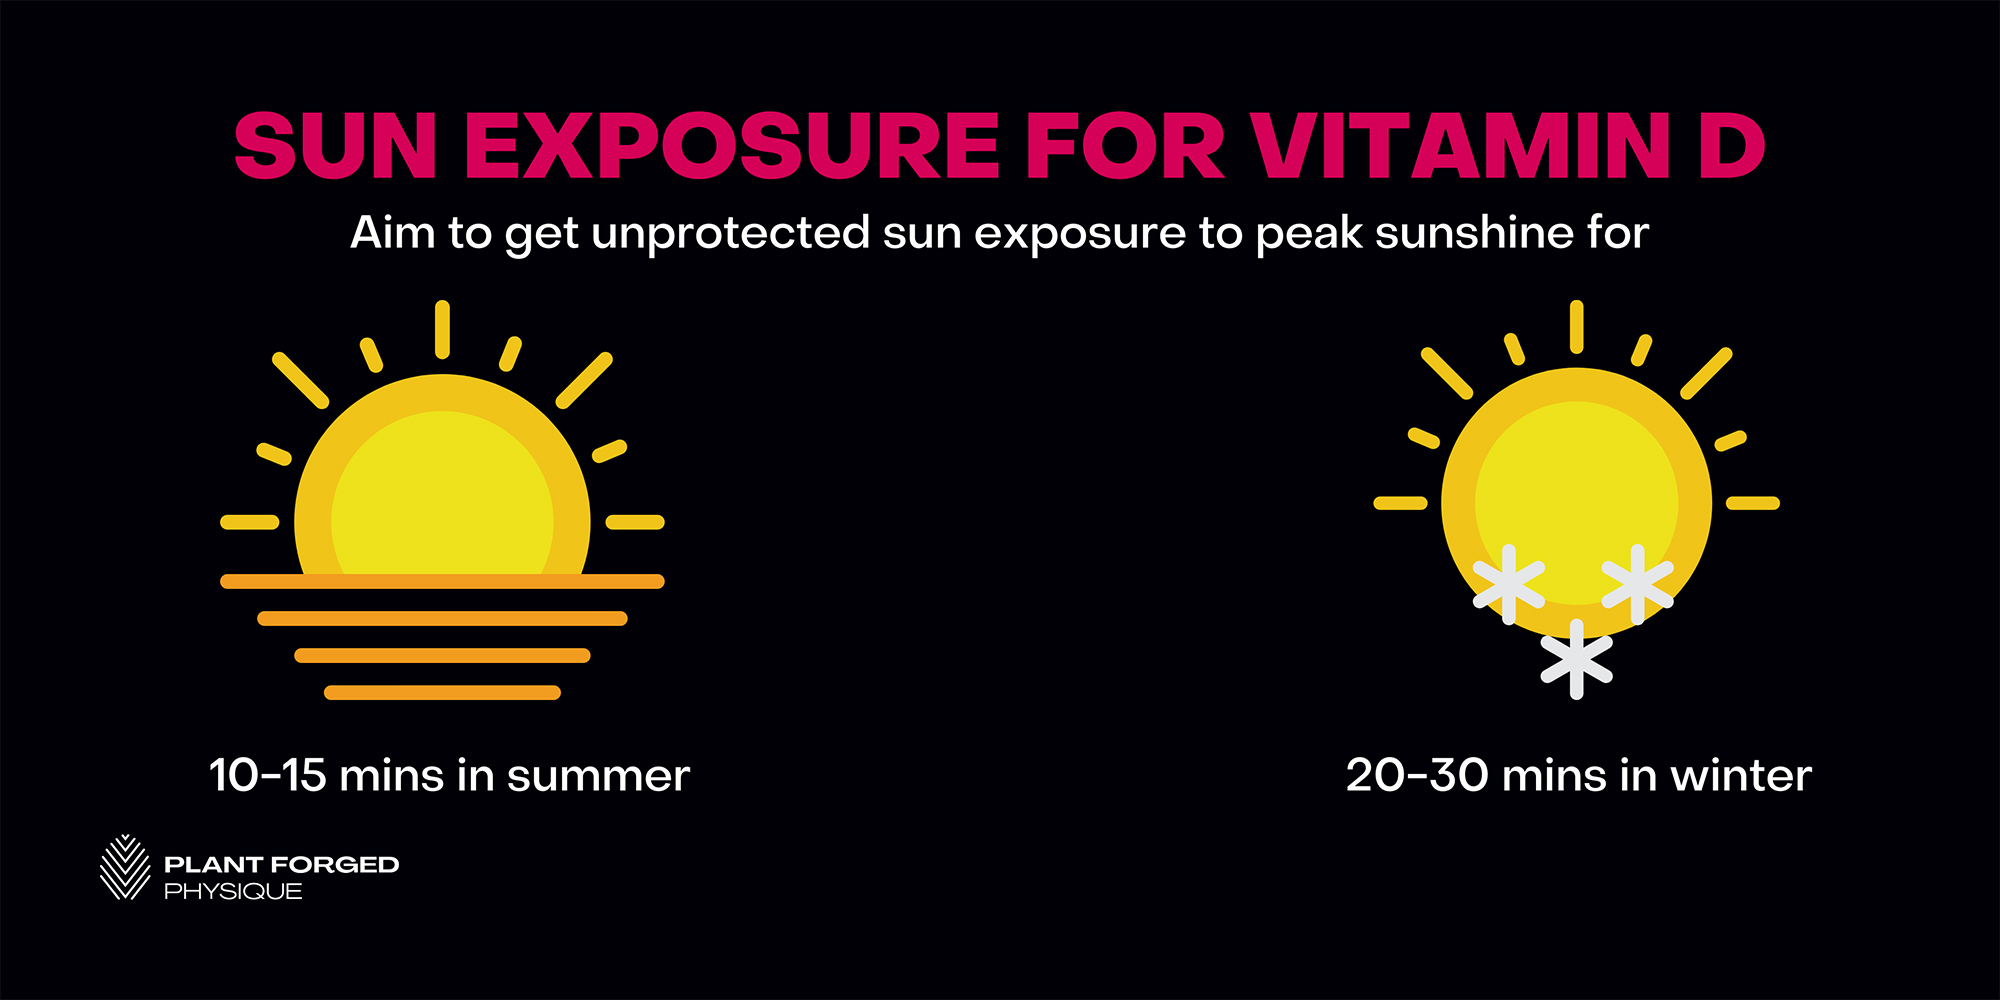 Sun exposure for Vitamin D